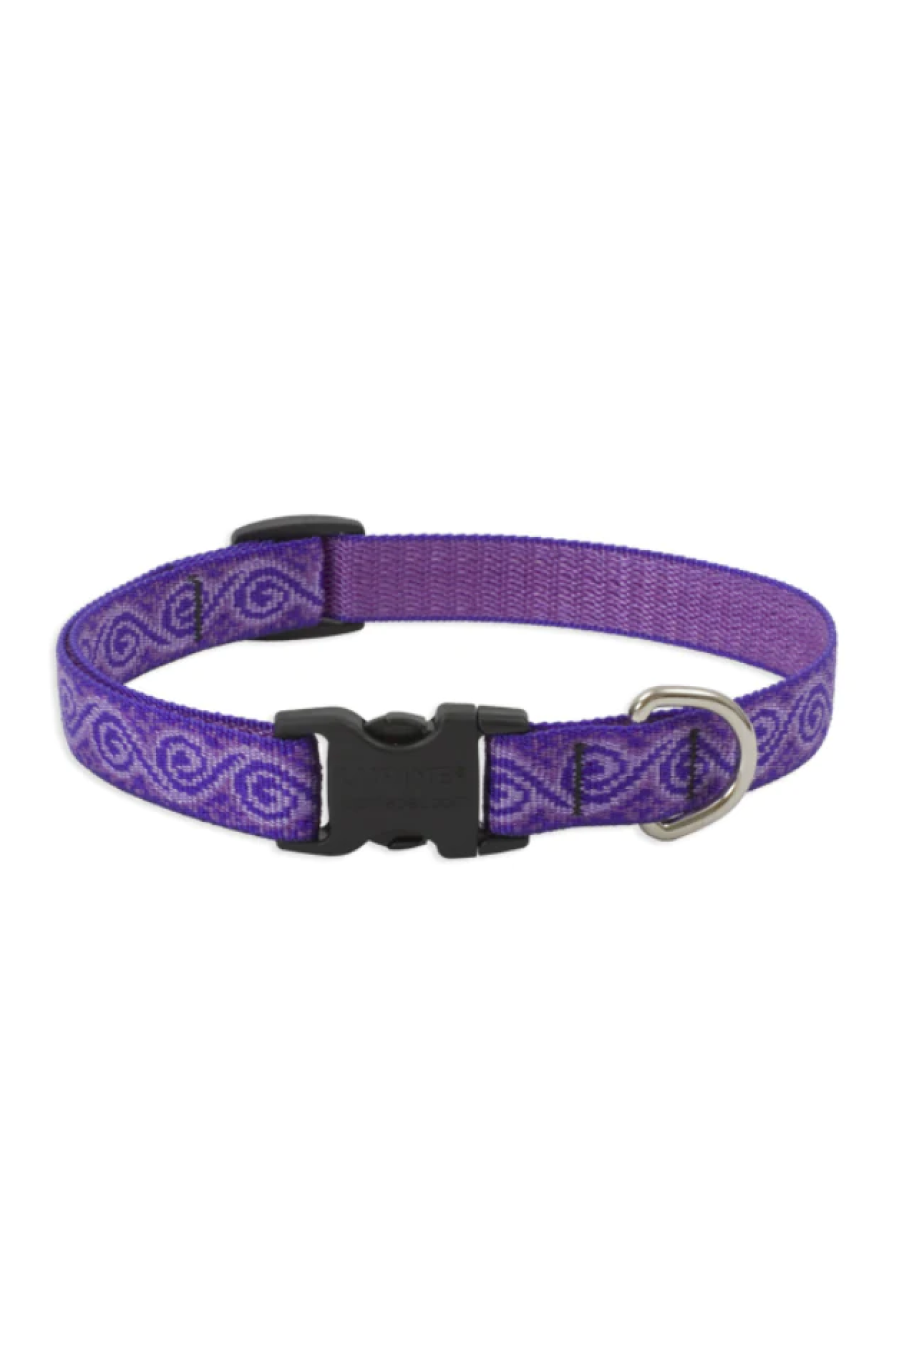 Lupine Dog Collar -  3/4''x9-14'' - Purple